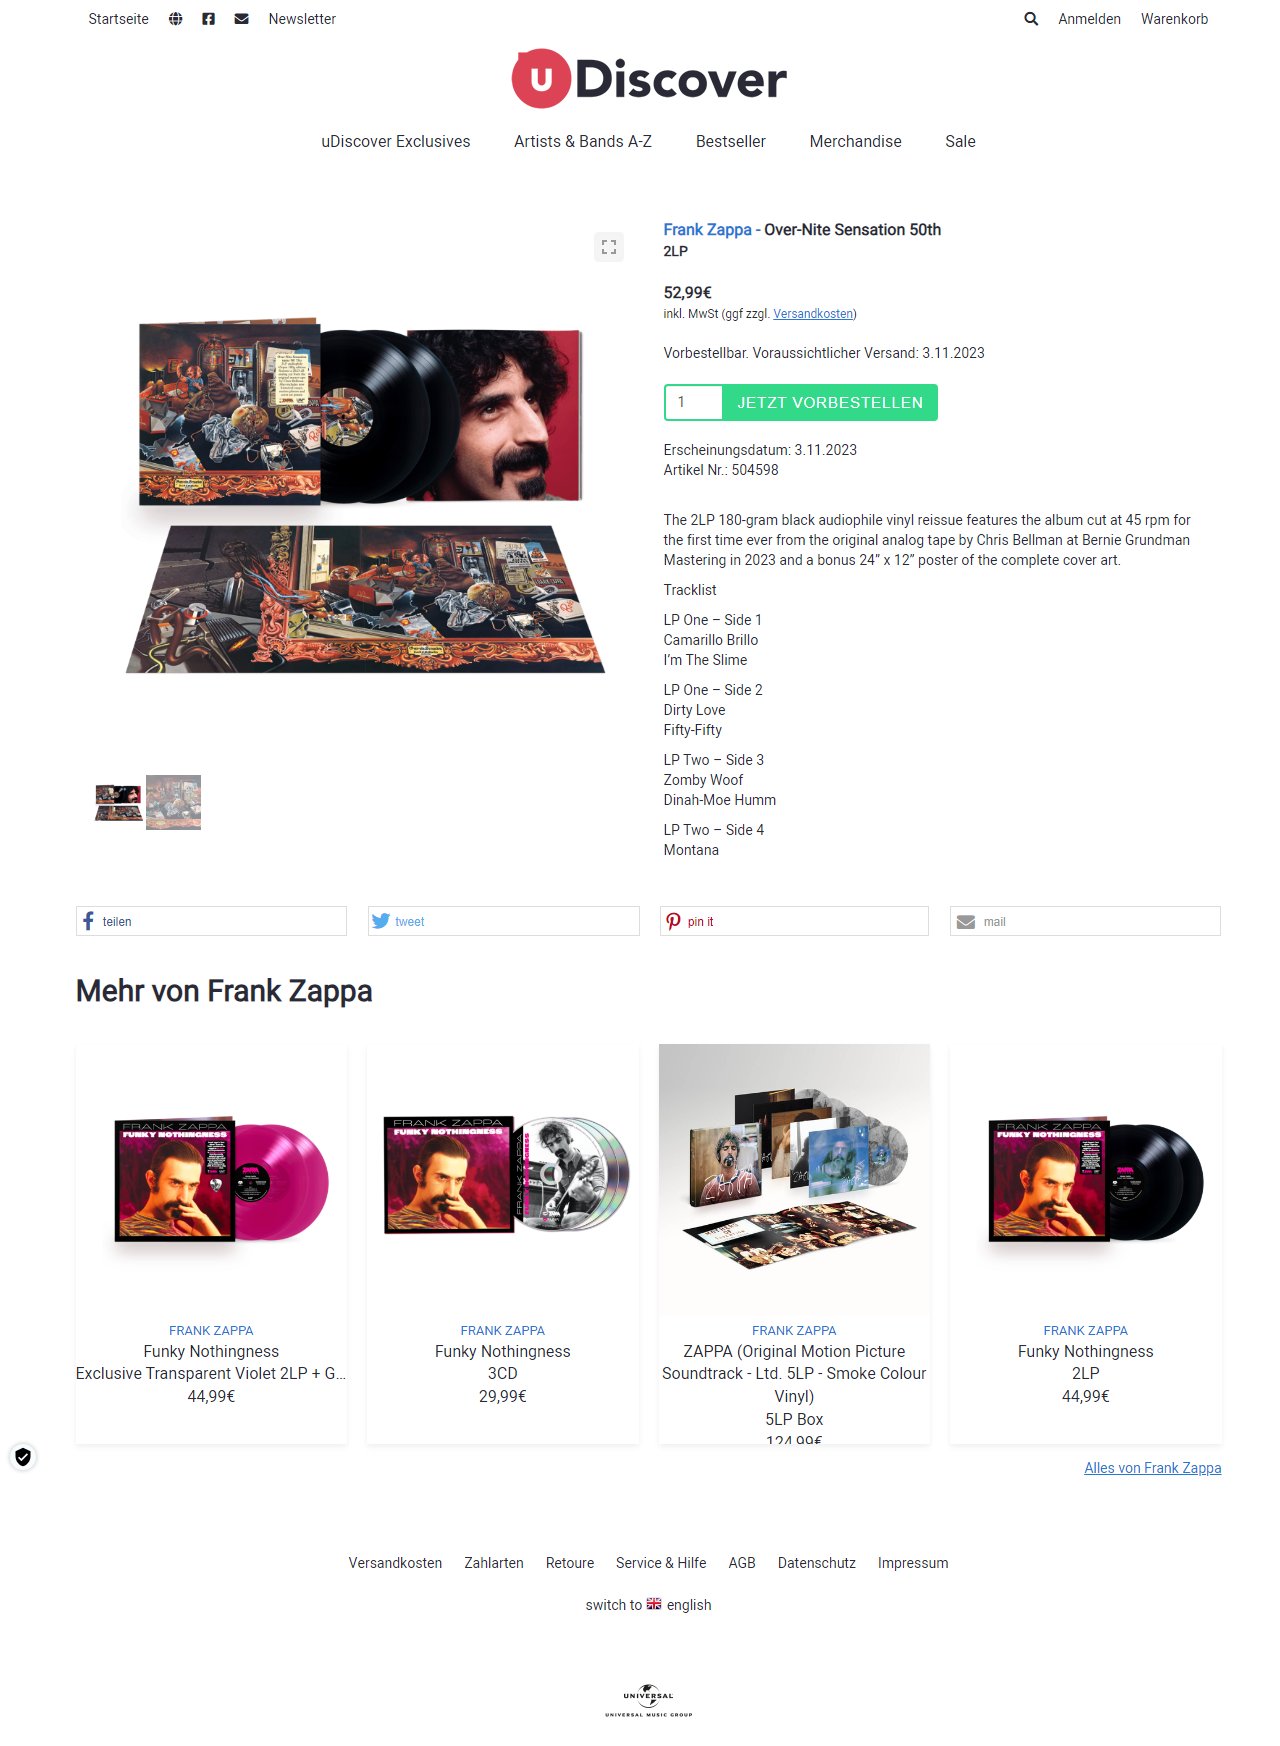 Frank-Zappa-Over-Nite-Sensation-50th-Vinyl-504598-398732-20230826_1280.jpg